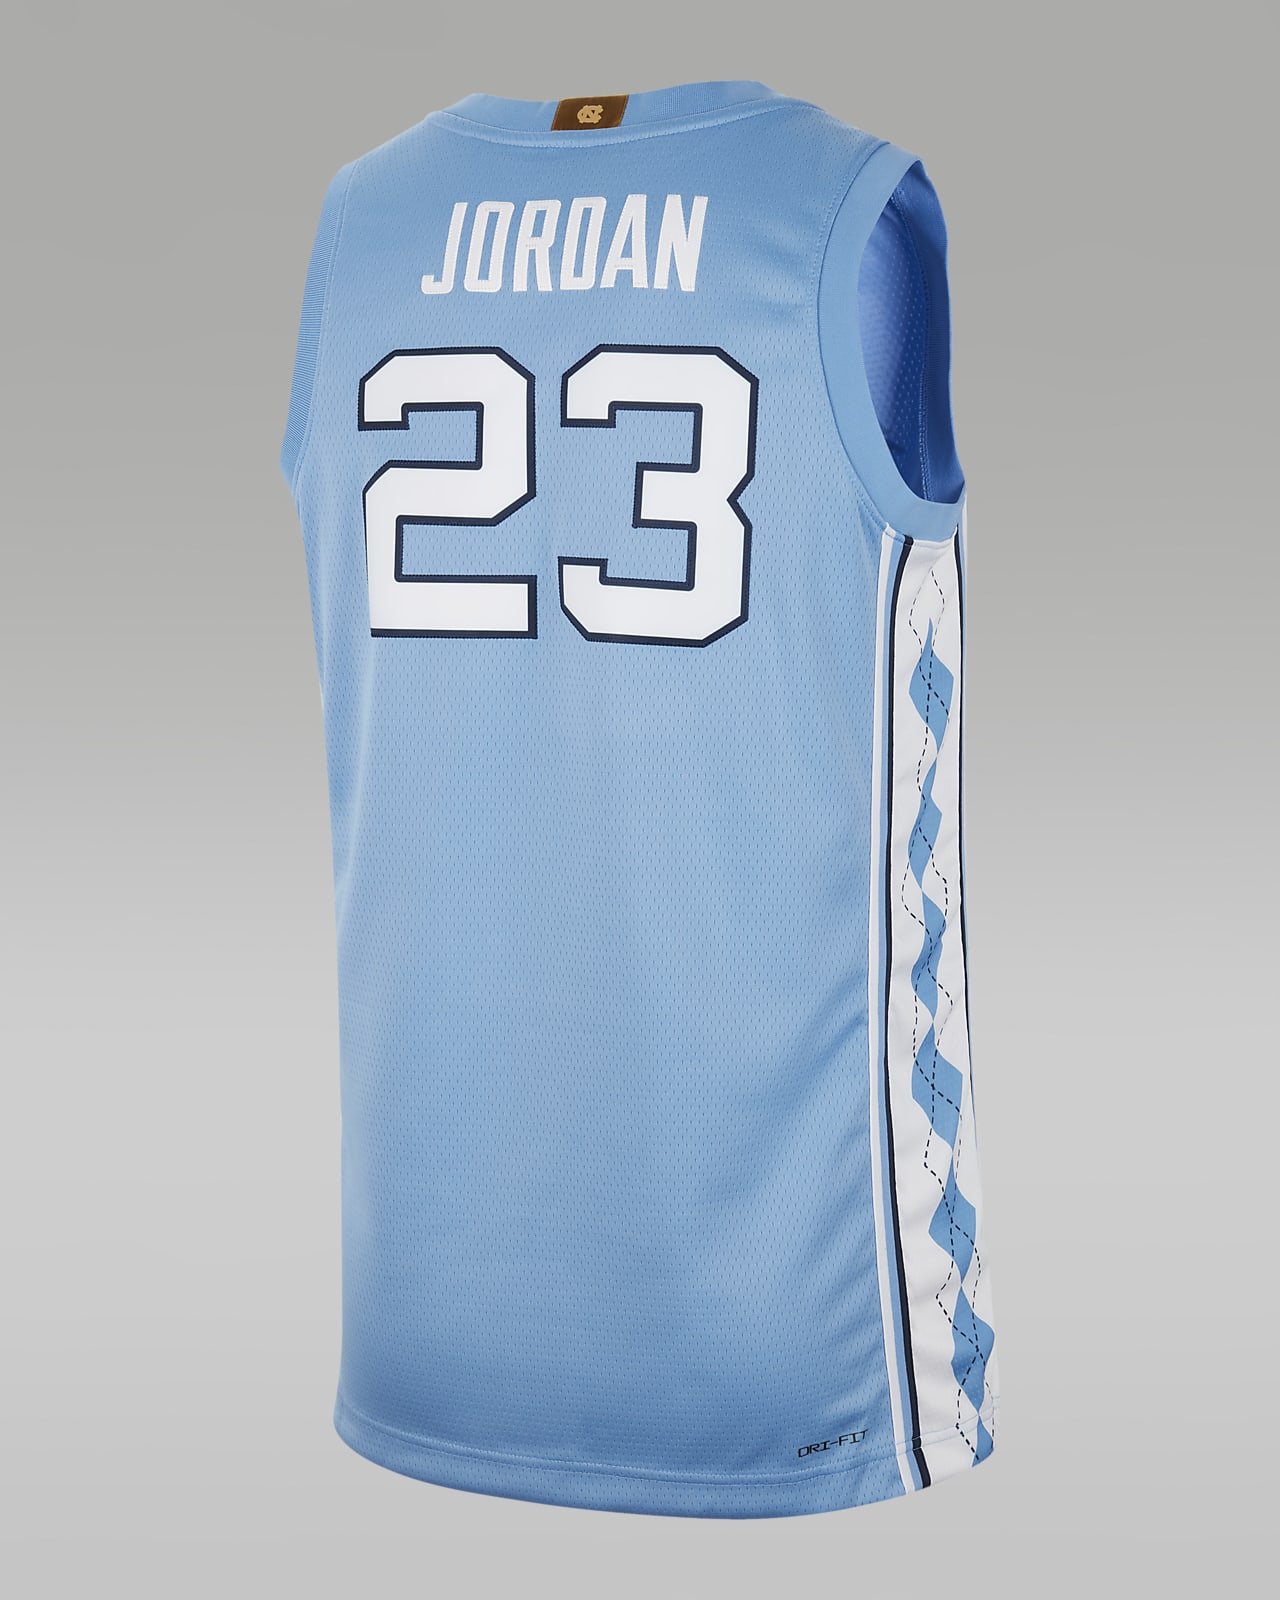 Jordan College (UNC) Men's Limited Basketball Jersey